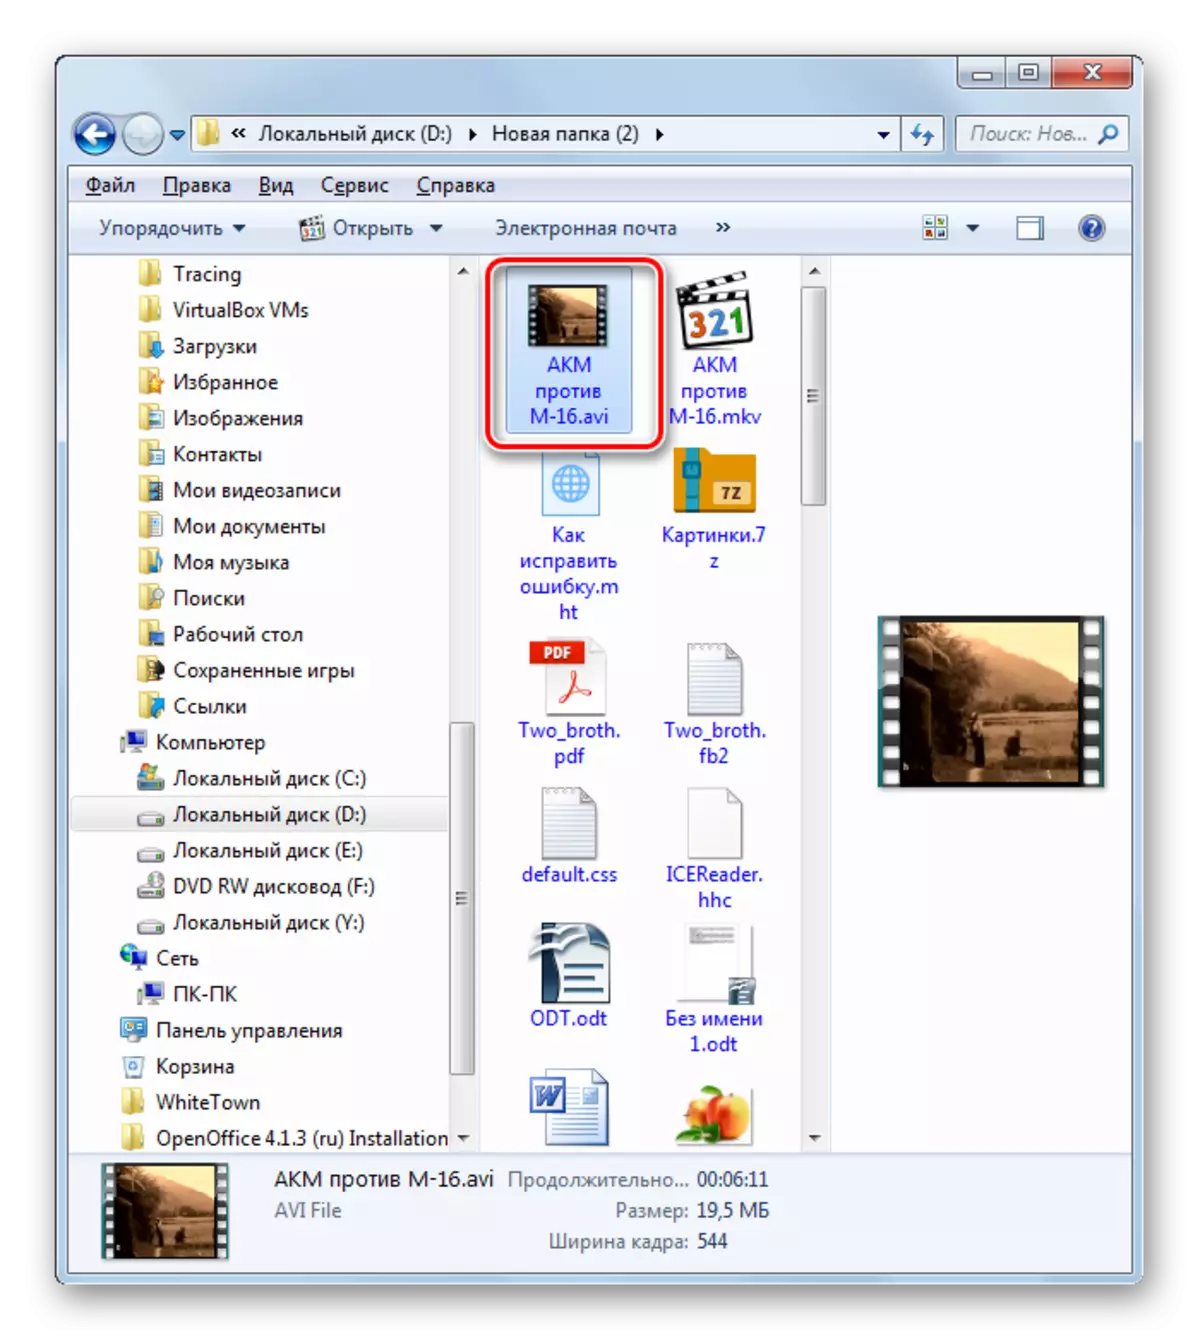 Hloov avi video hauv Windows Explorer